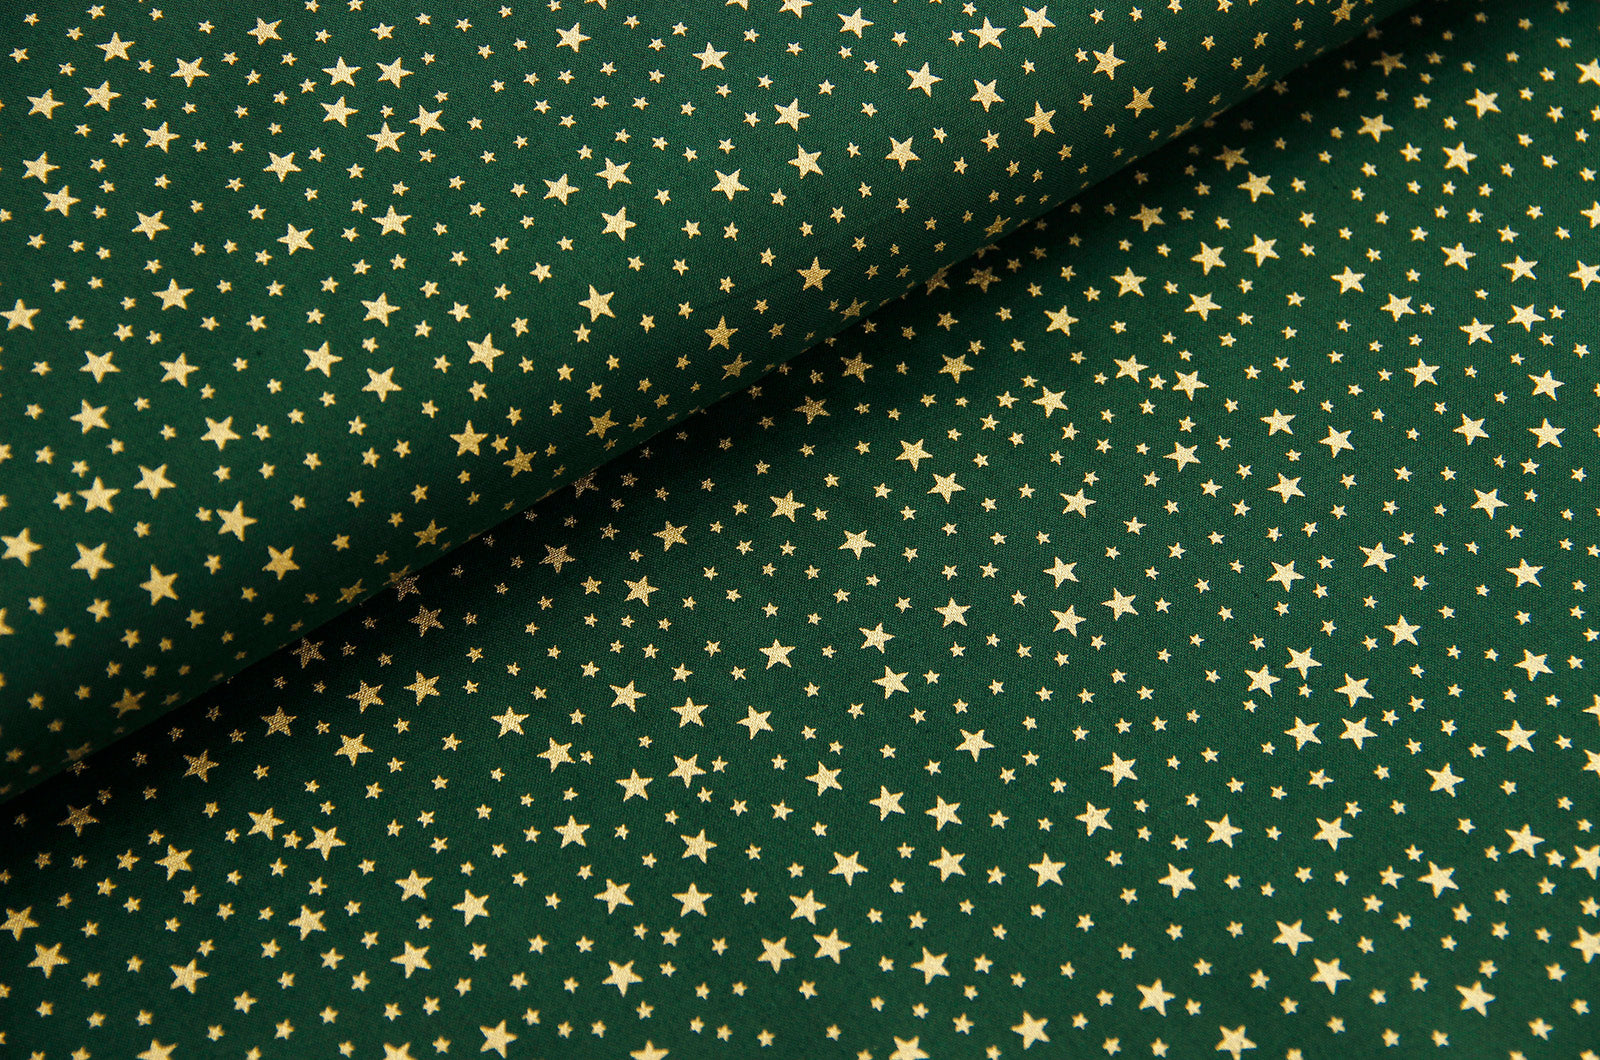 003 étoiles vertes